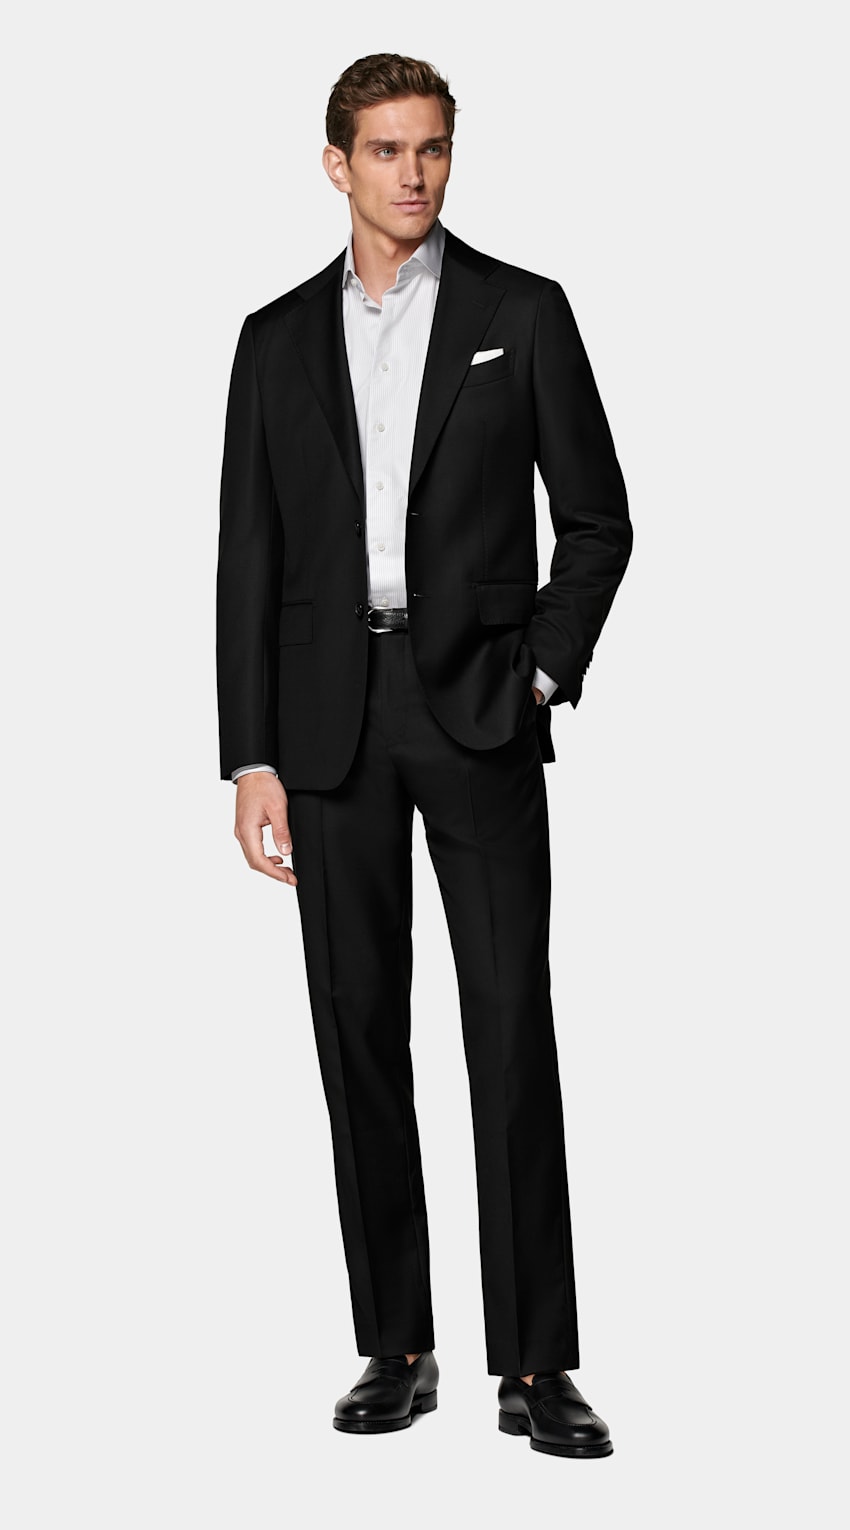 SUITSUPPLY Pura lana S110s de Vitale Barberis Canonico, Italia Blazer de traje Havana negro corte Tailored